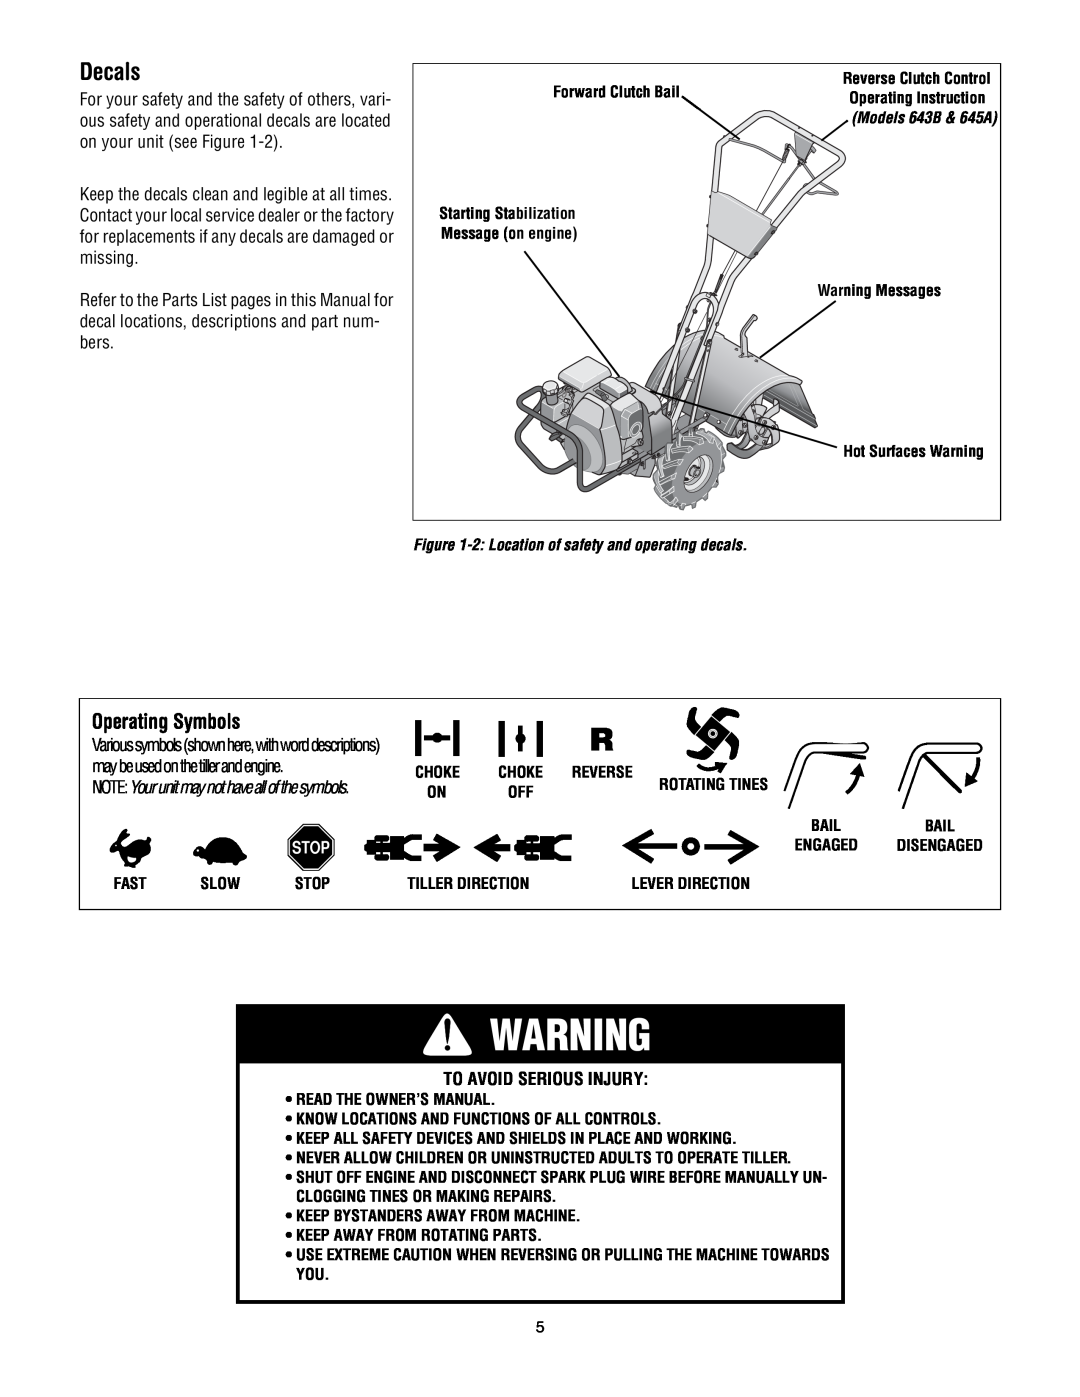 Troy-Bilt 643B Super Bronco manual Decals, Operating Symbols, maybeusedonthetillerandengine, To Avoid Serious Injury 